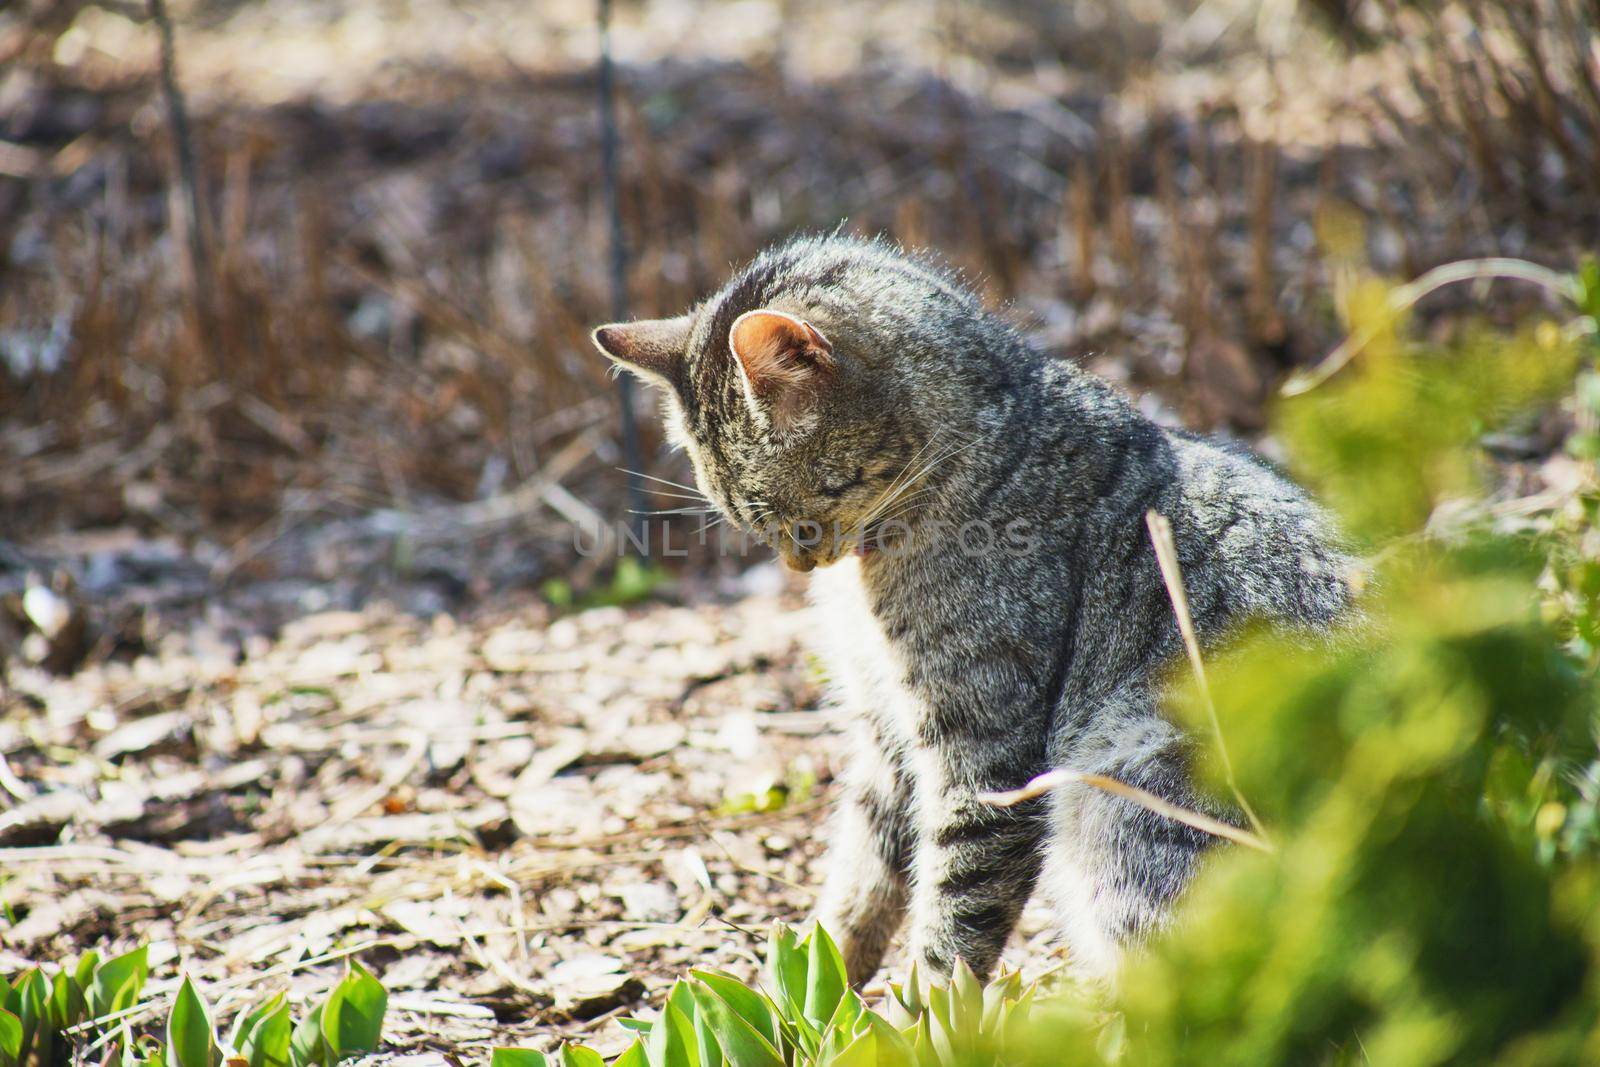 domestic cat exploring the garden